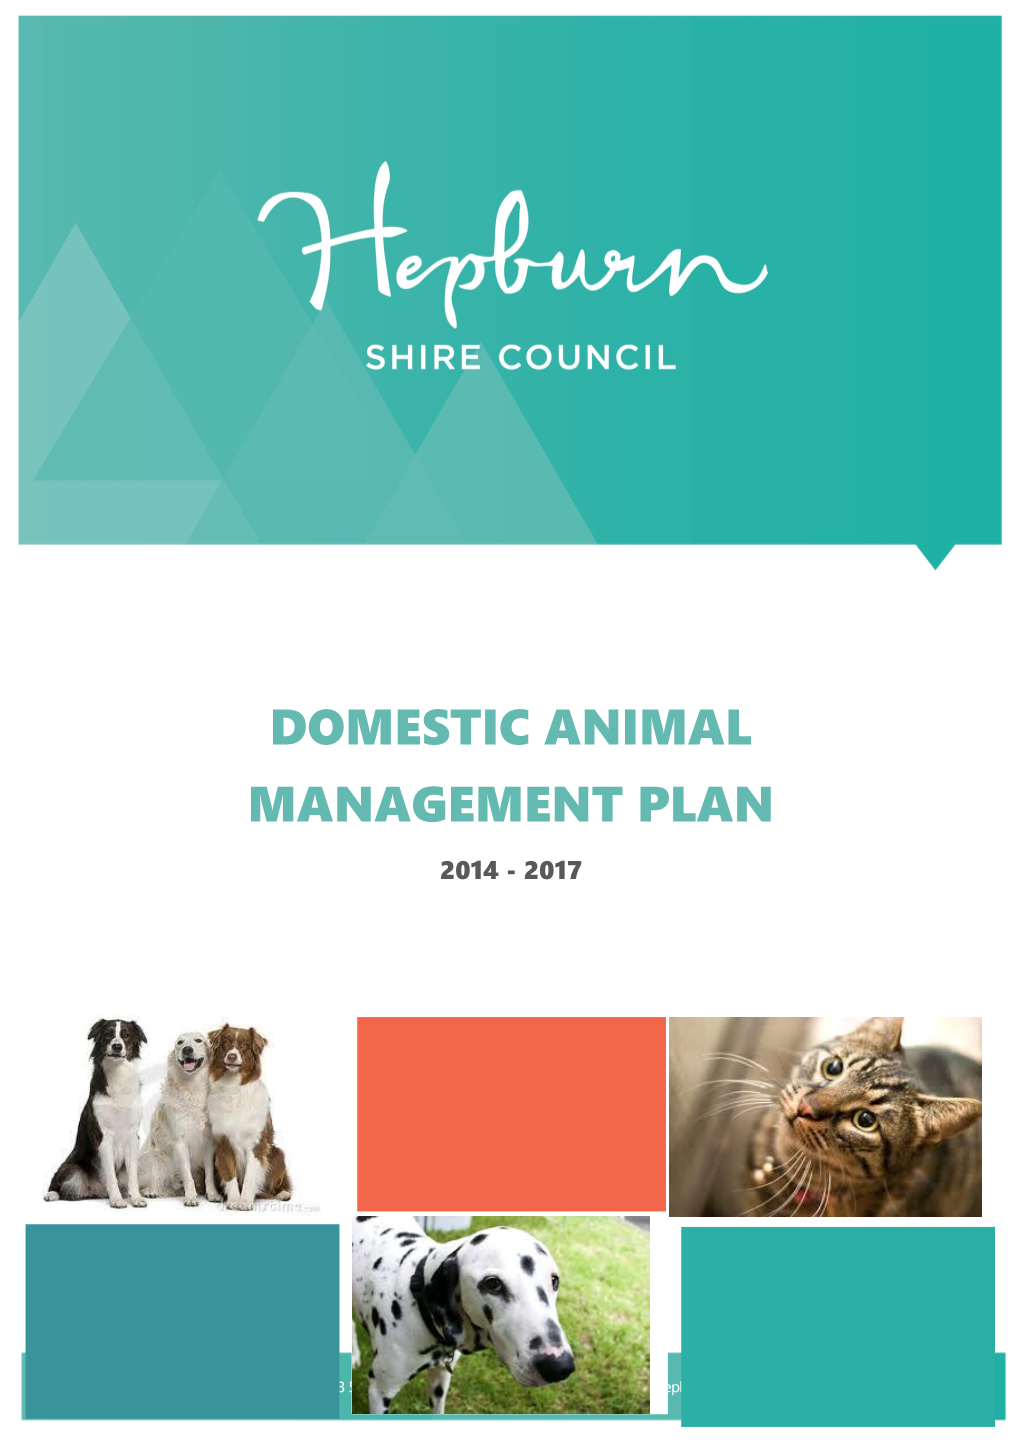 DOMESTIC ANIMAL Management PLAN